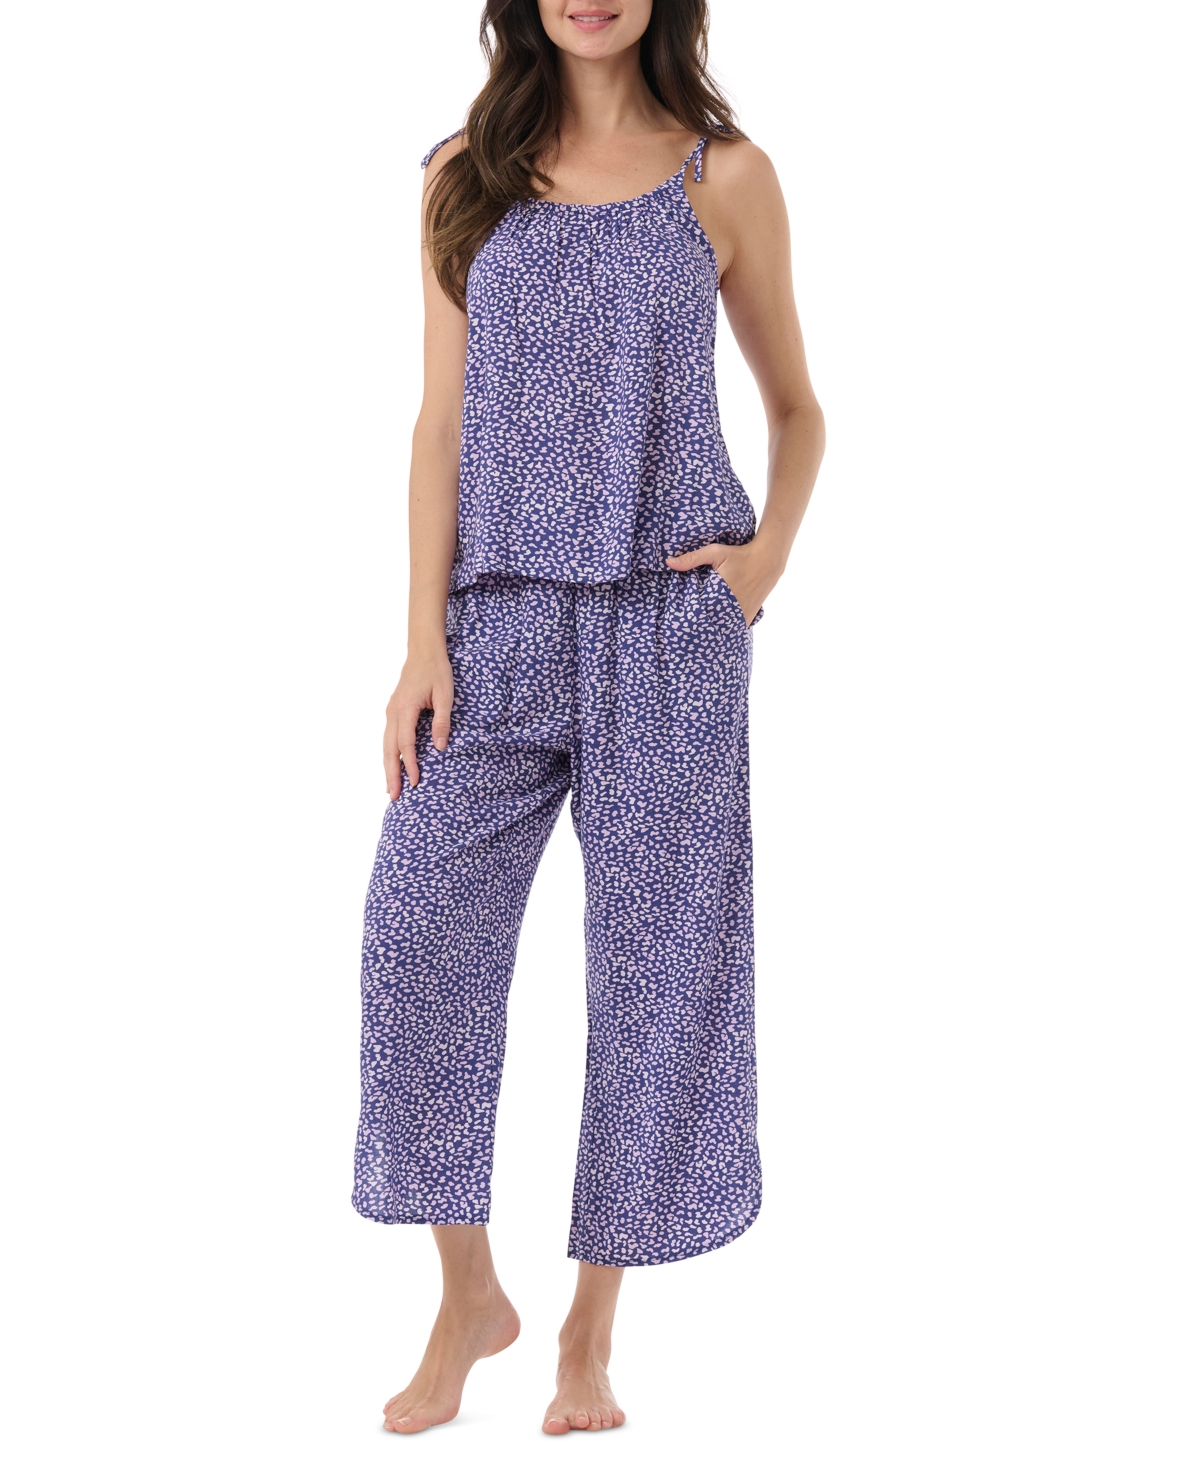 Women's 2-Pc. Tie-Strap Cami Pajamas Set - Heart Stroke